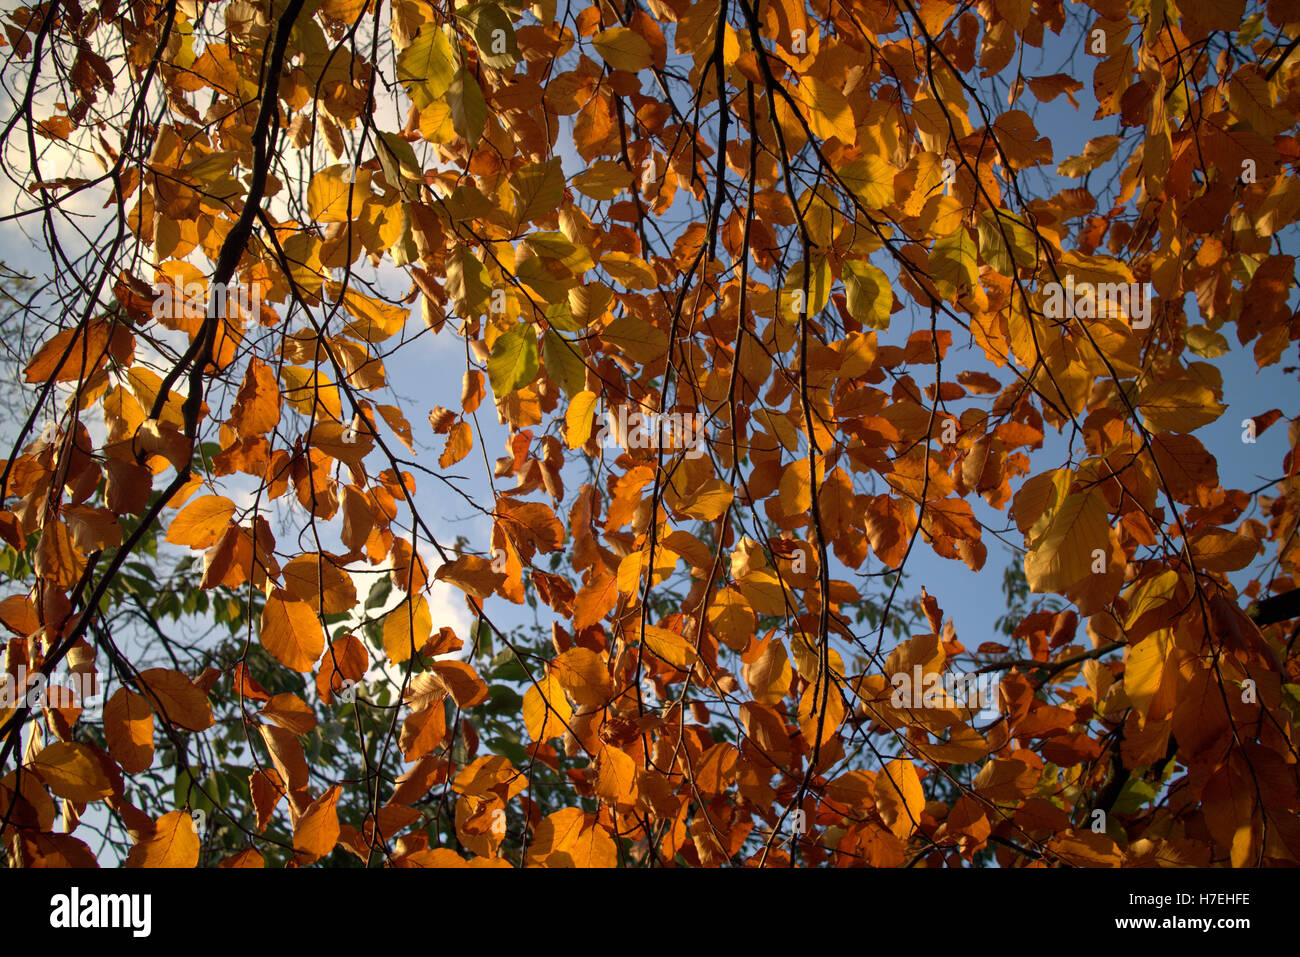 Im Herbst Laub-Bäume goldene Blätter Muster und Farbe Stockfoto